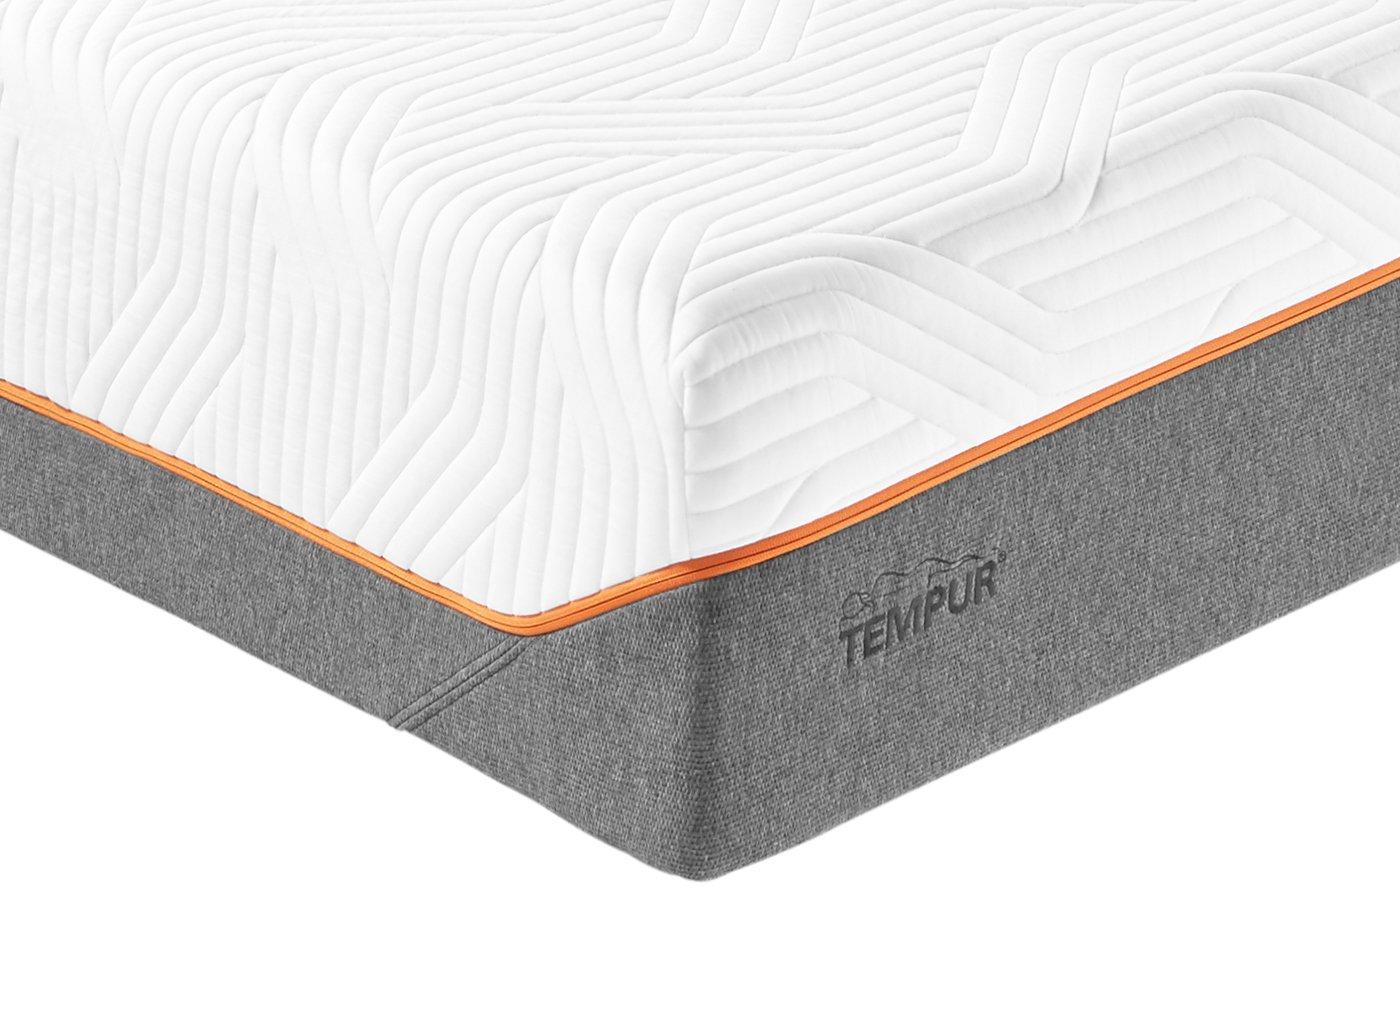 tempur cooltouch hybrid elite 25k mattress